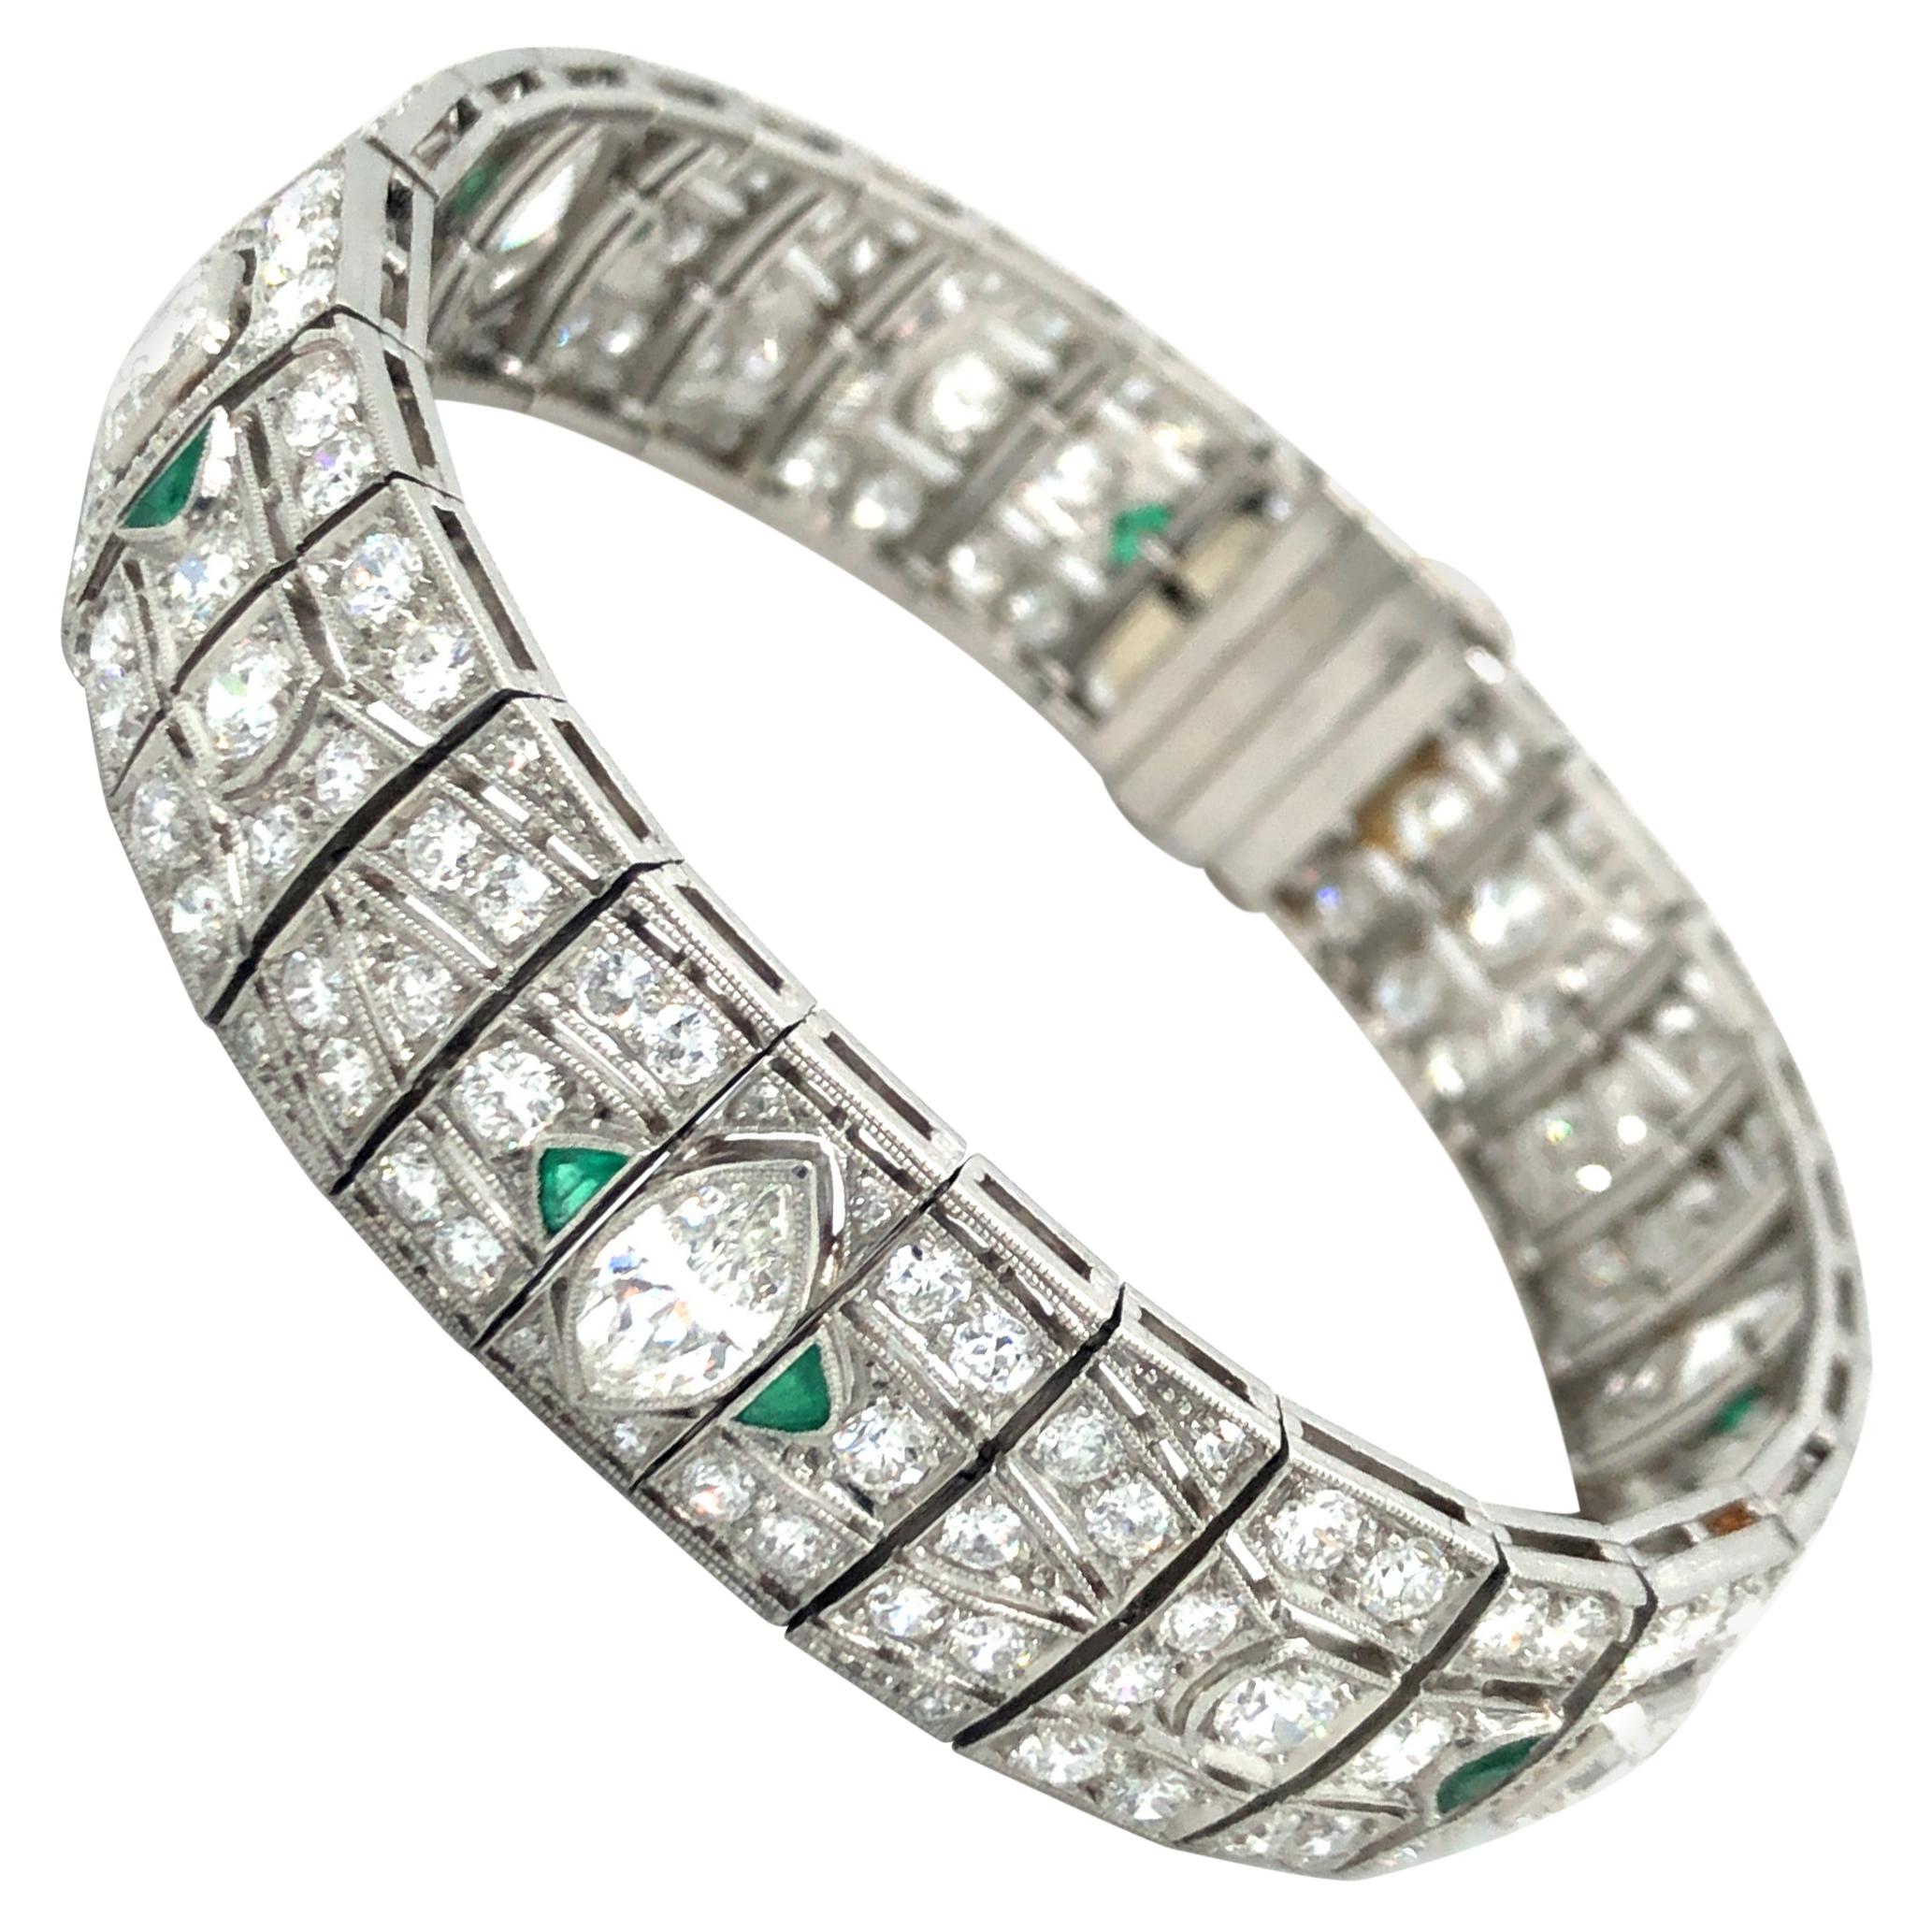 Stunning Diamond and Emerald Art Deco Bracelet in Platinum 950 For Sale